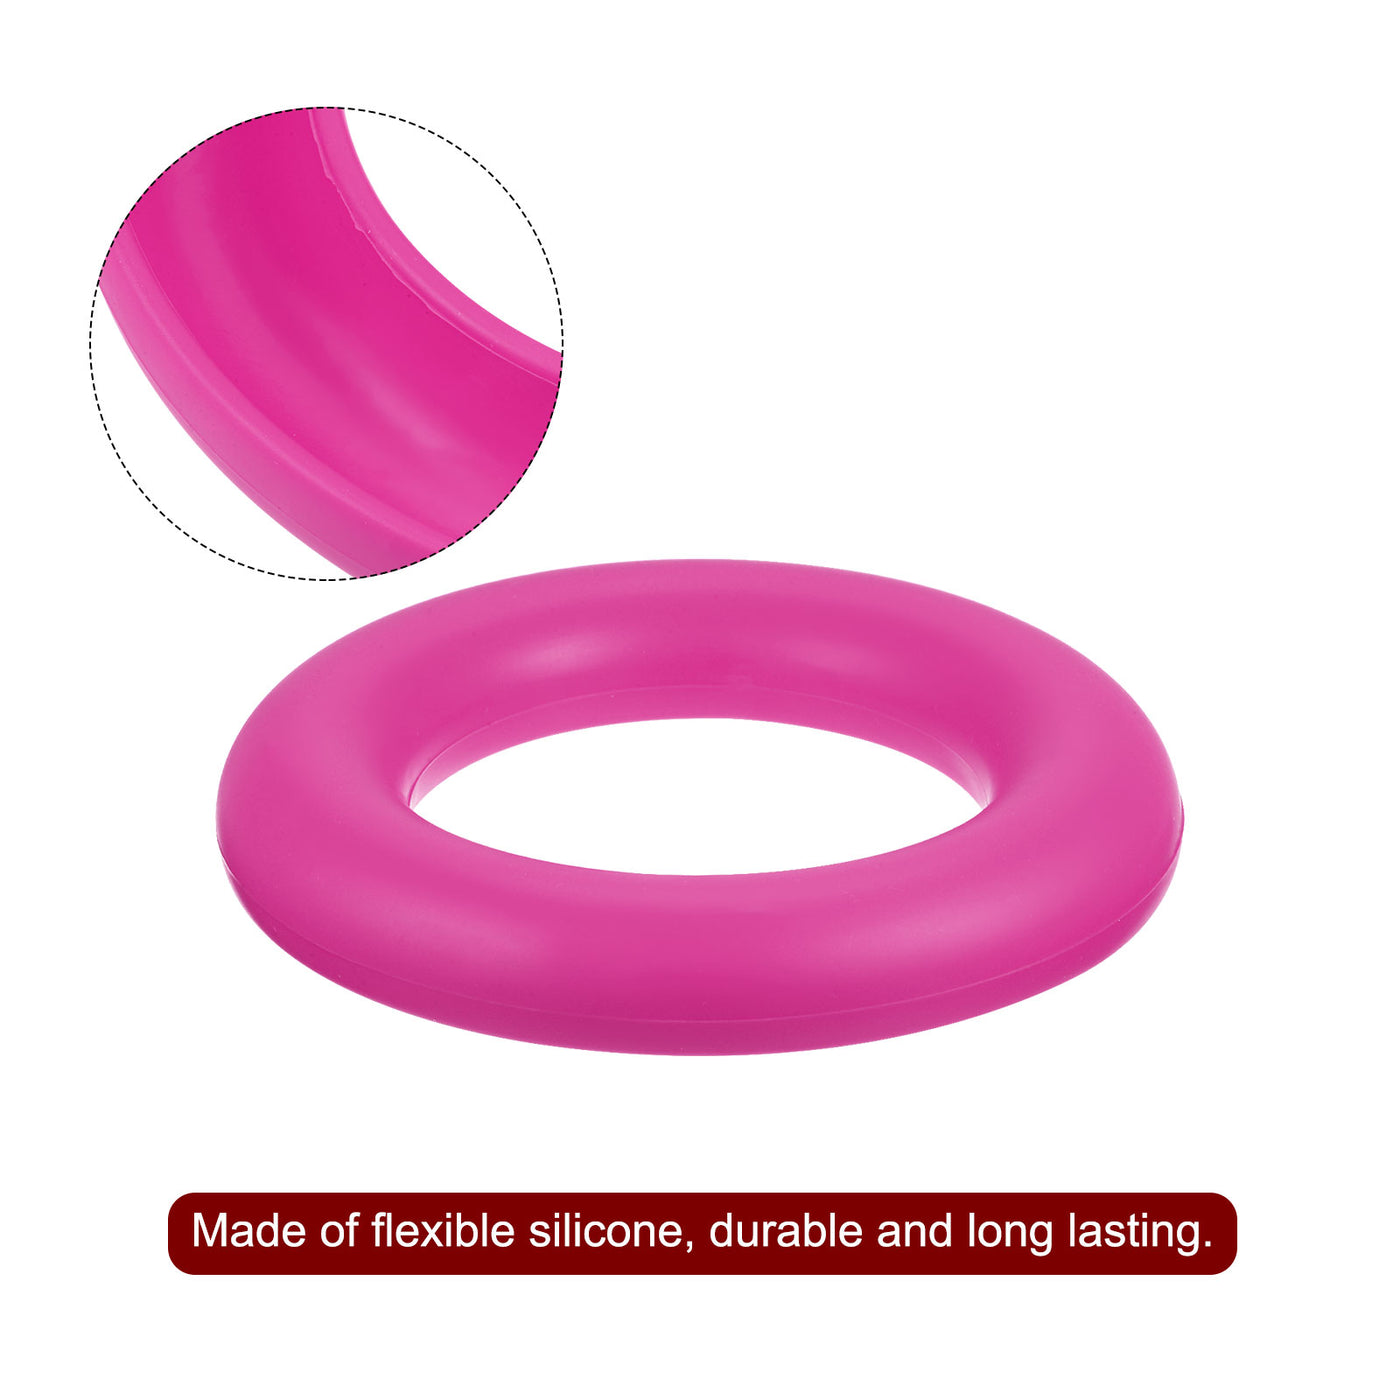 Harfington Silicone Bobbin Ring Holder and 20 Plastic Bobbins Set, Rose Red/Red